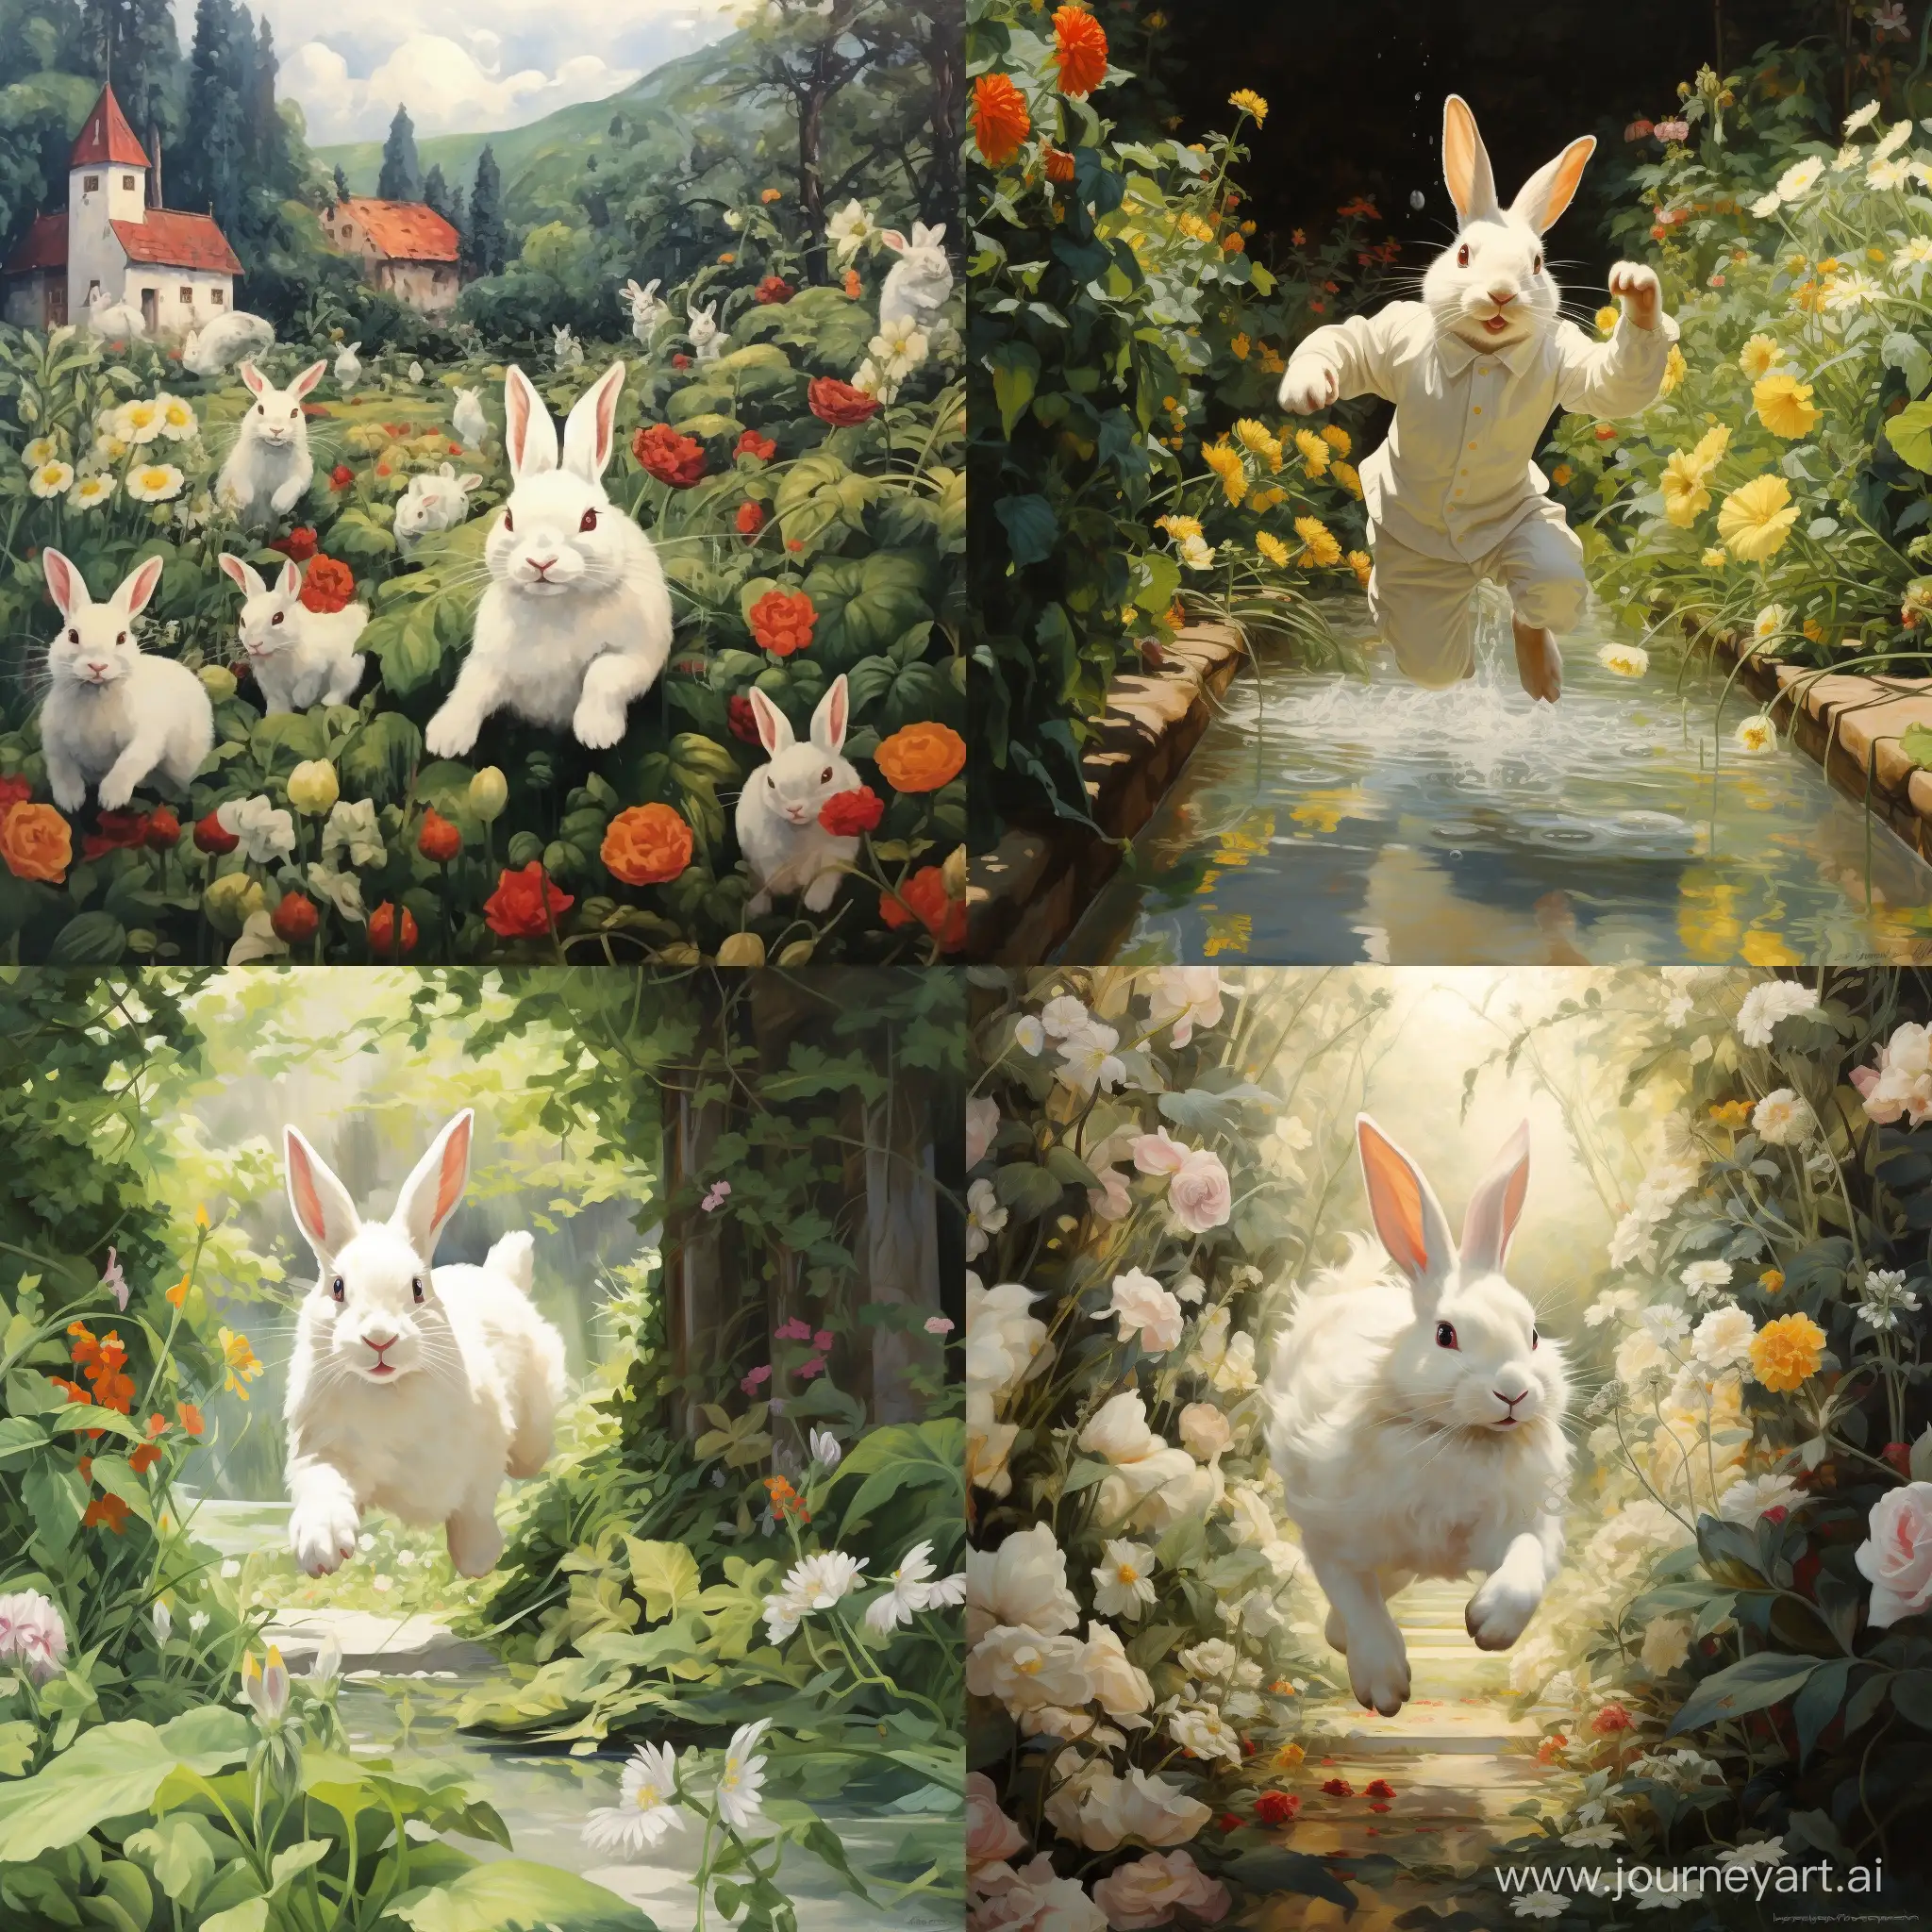 Graceful-White-Rabbit-Running-in-a-Lush-Garden